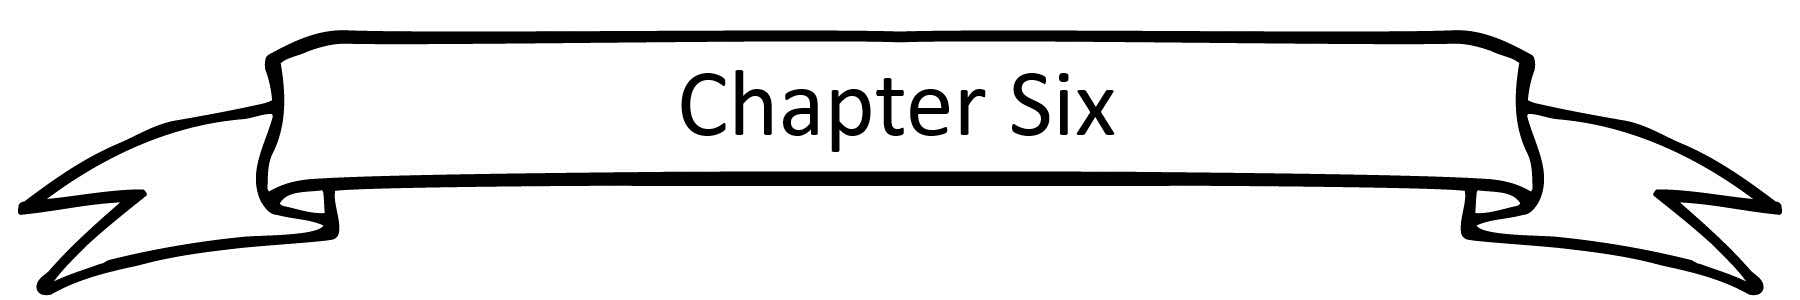 chapter six heading